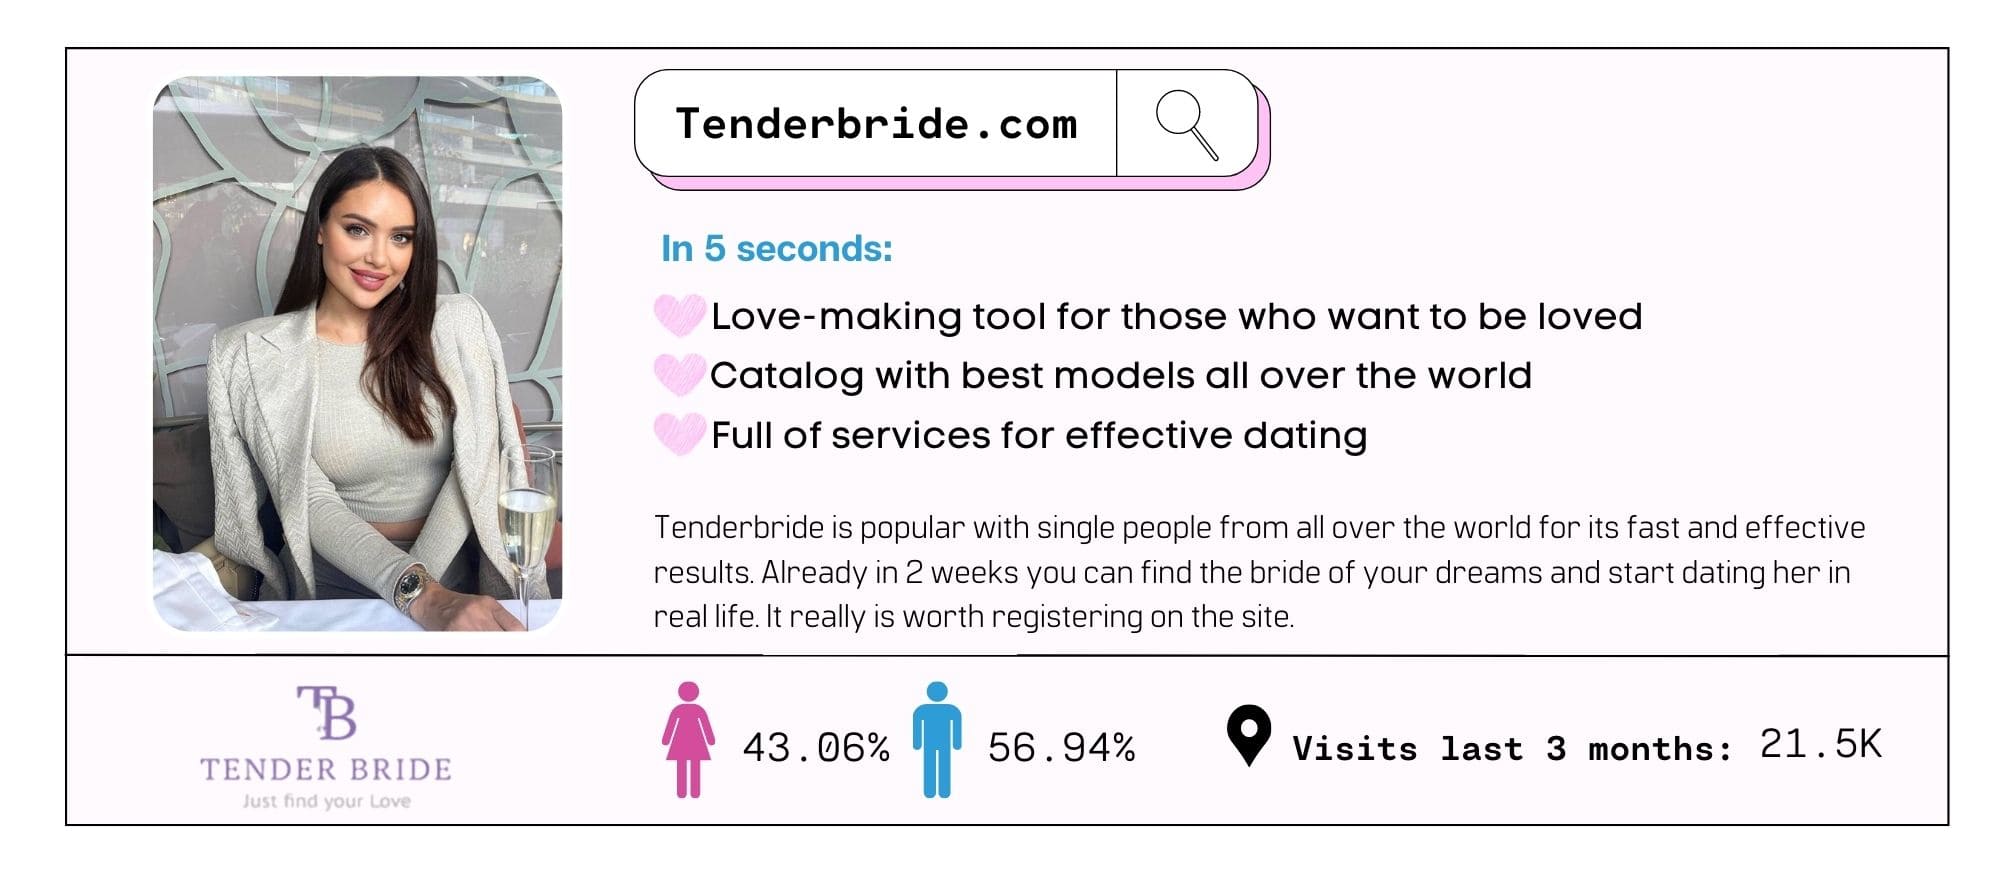 Effective dating tool - Tenderbride.com